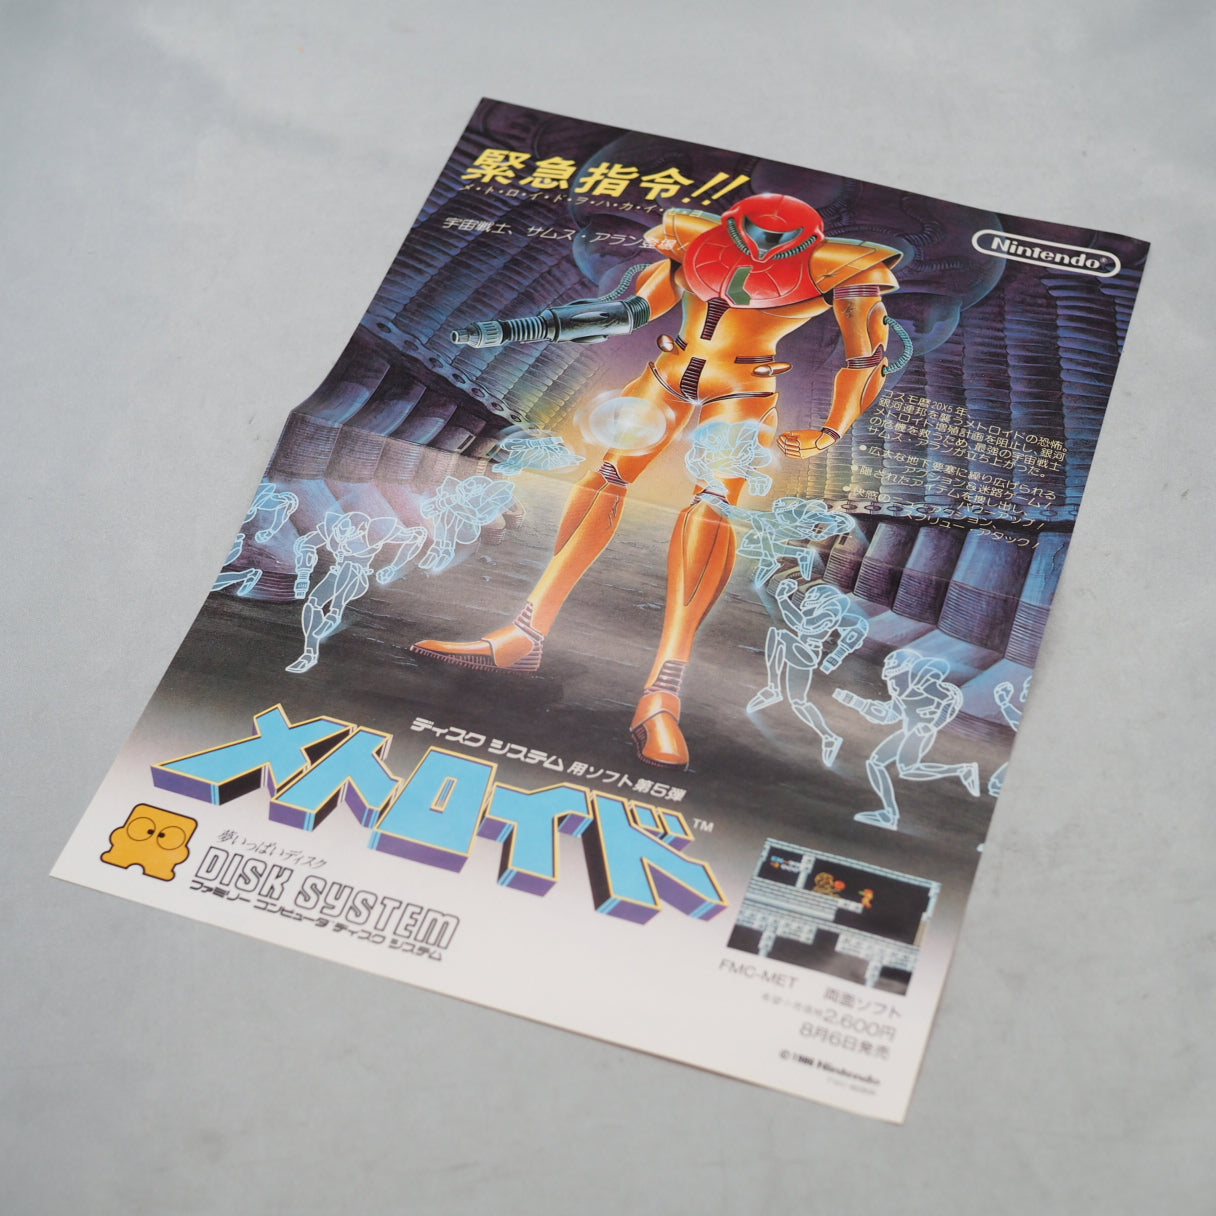 METROID Nintendo Famicom disk Catalog Flyer Leaflet Paper Poster